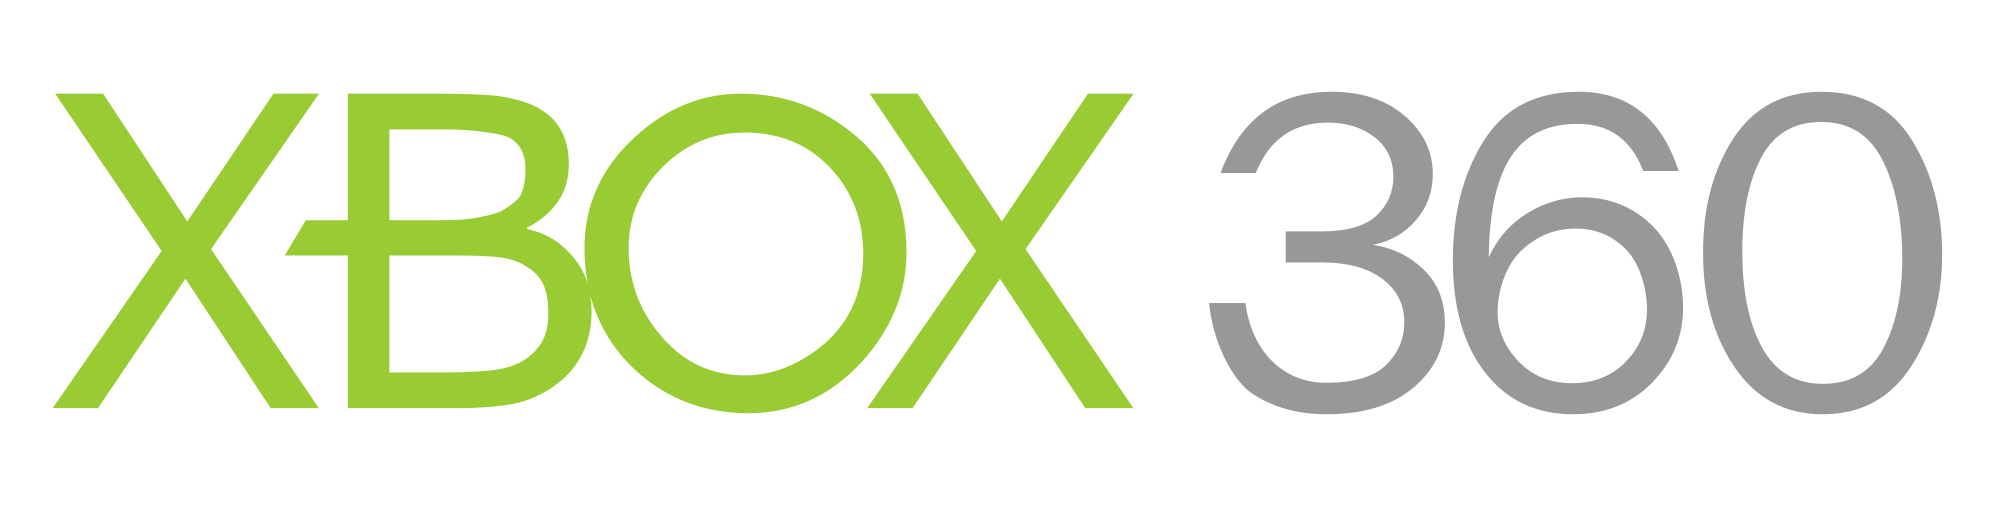 New Xbox 360 Logo - File:Xbox 360 logo.svg - Wikimedia Commons